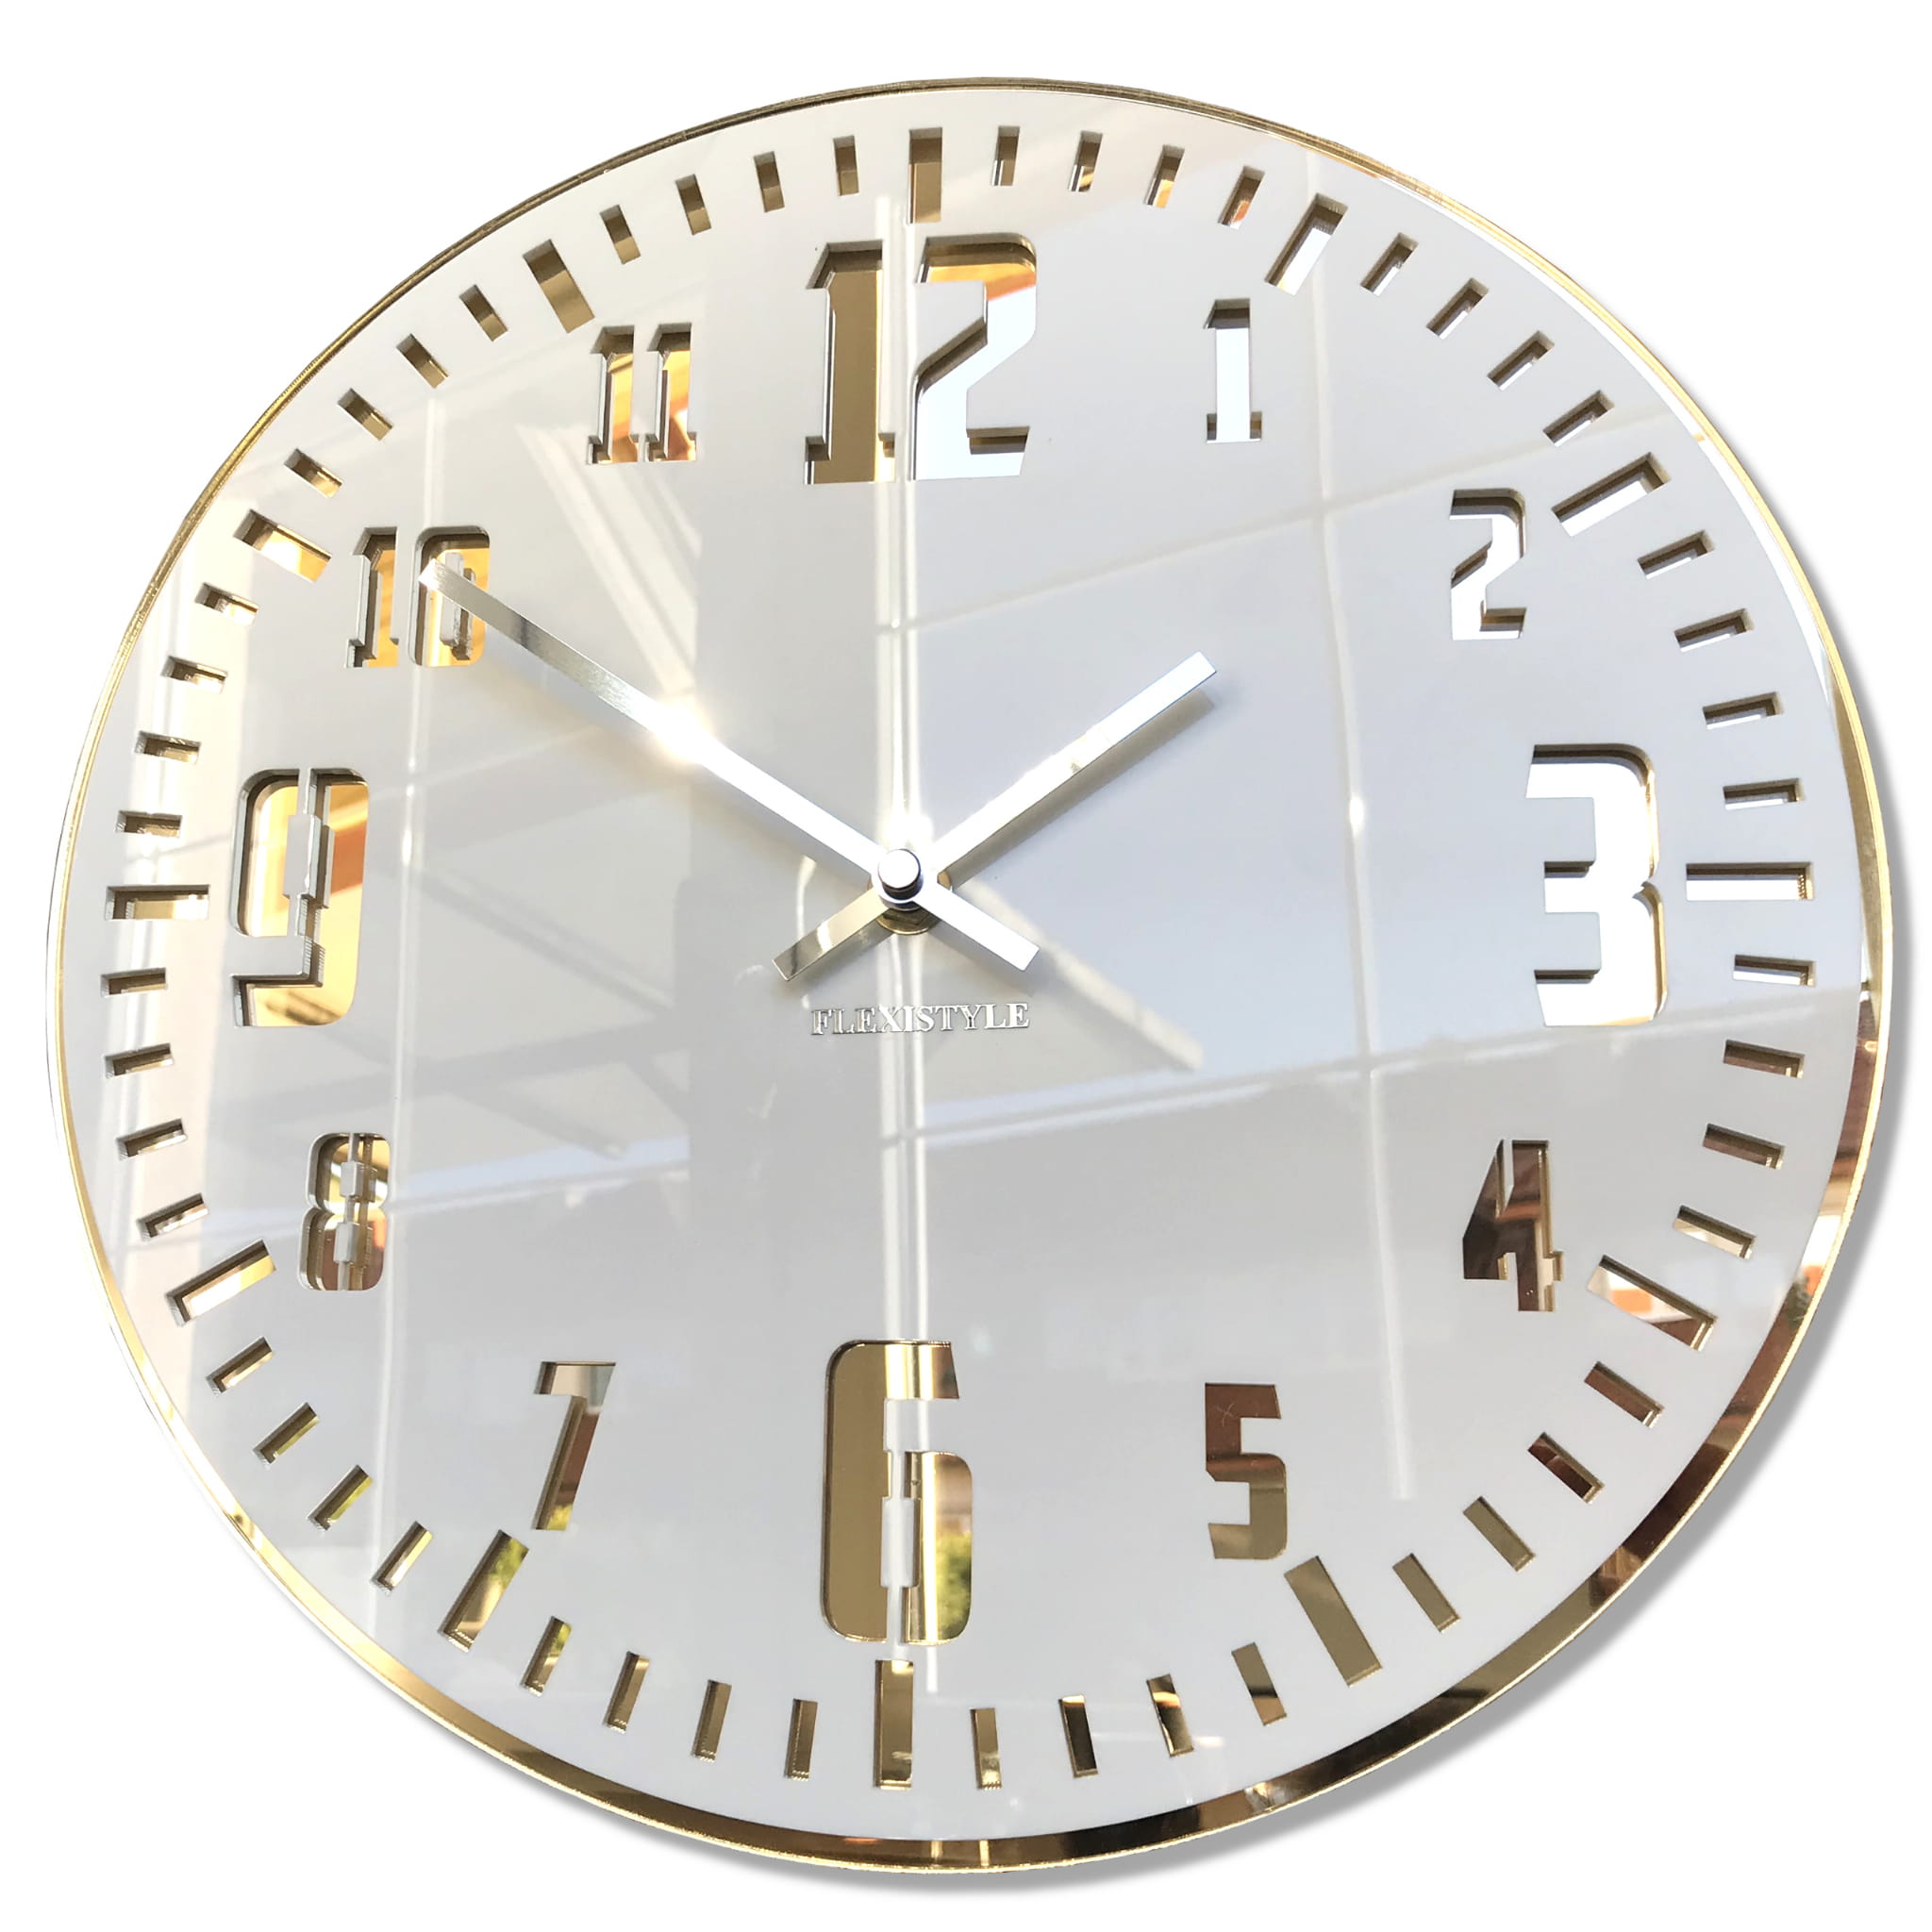 E-shop Nástenné akrylové hodiny Unique Flex z117-2-0-x, 30 cm, zlaté